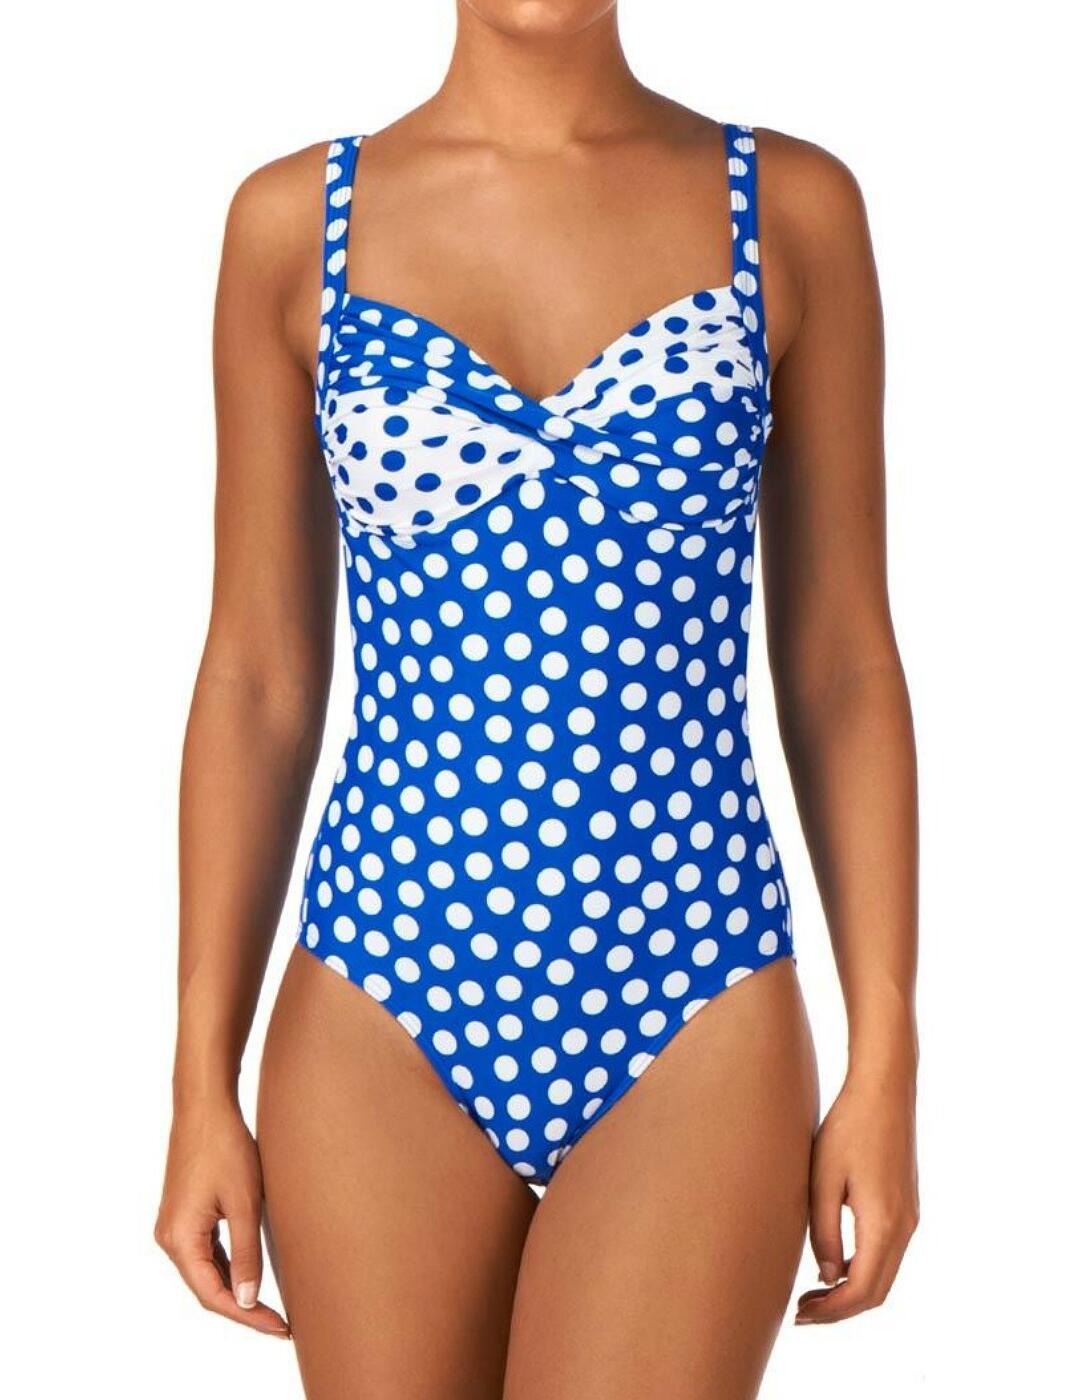 15-2757 SeaSpray Polka Dots Twist Front Tummy Control Swimsuit - 15-2757 Royal Blue